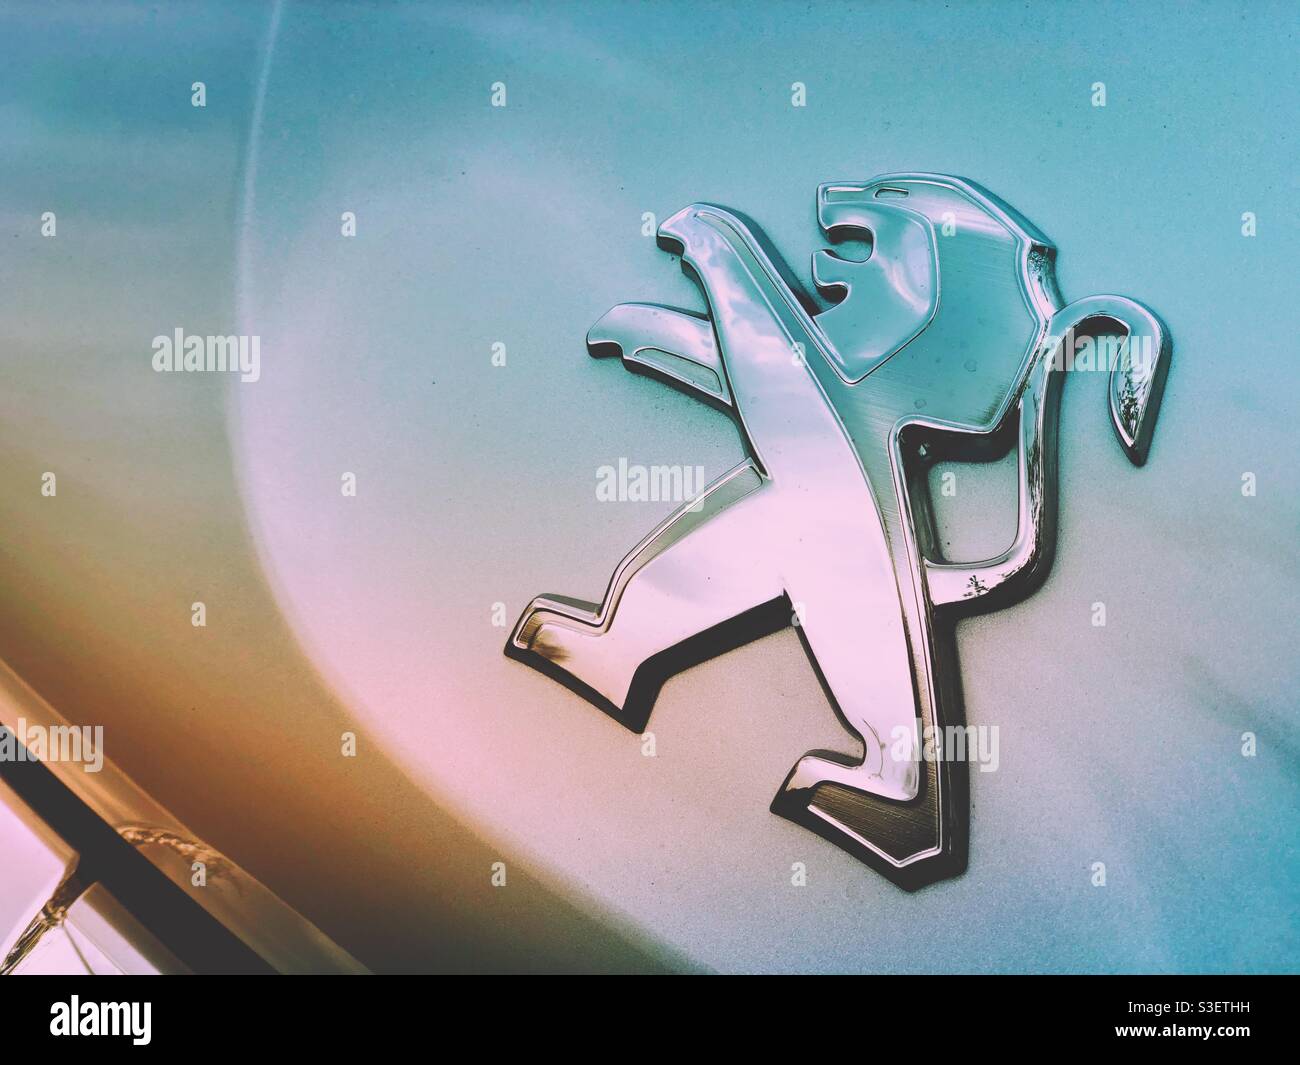 Peugeot lion logo on a car Stock Photo - Alamy